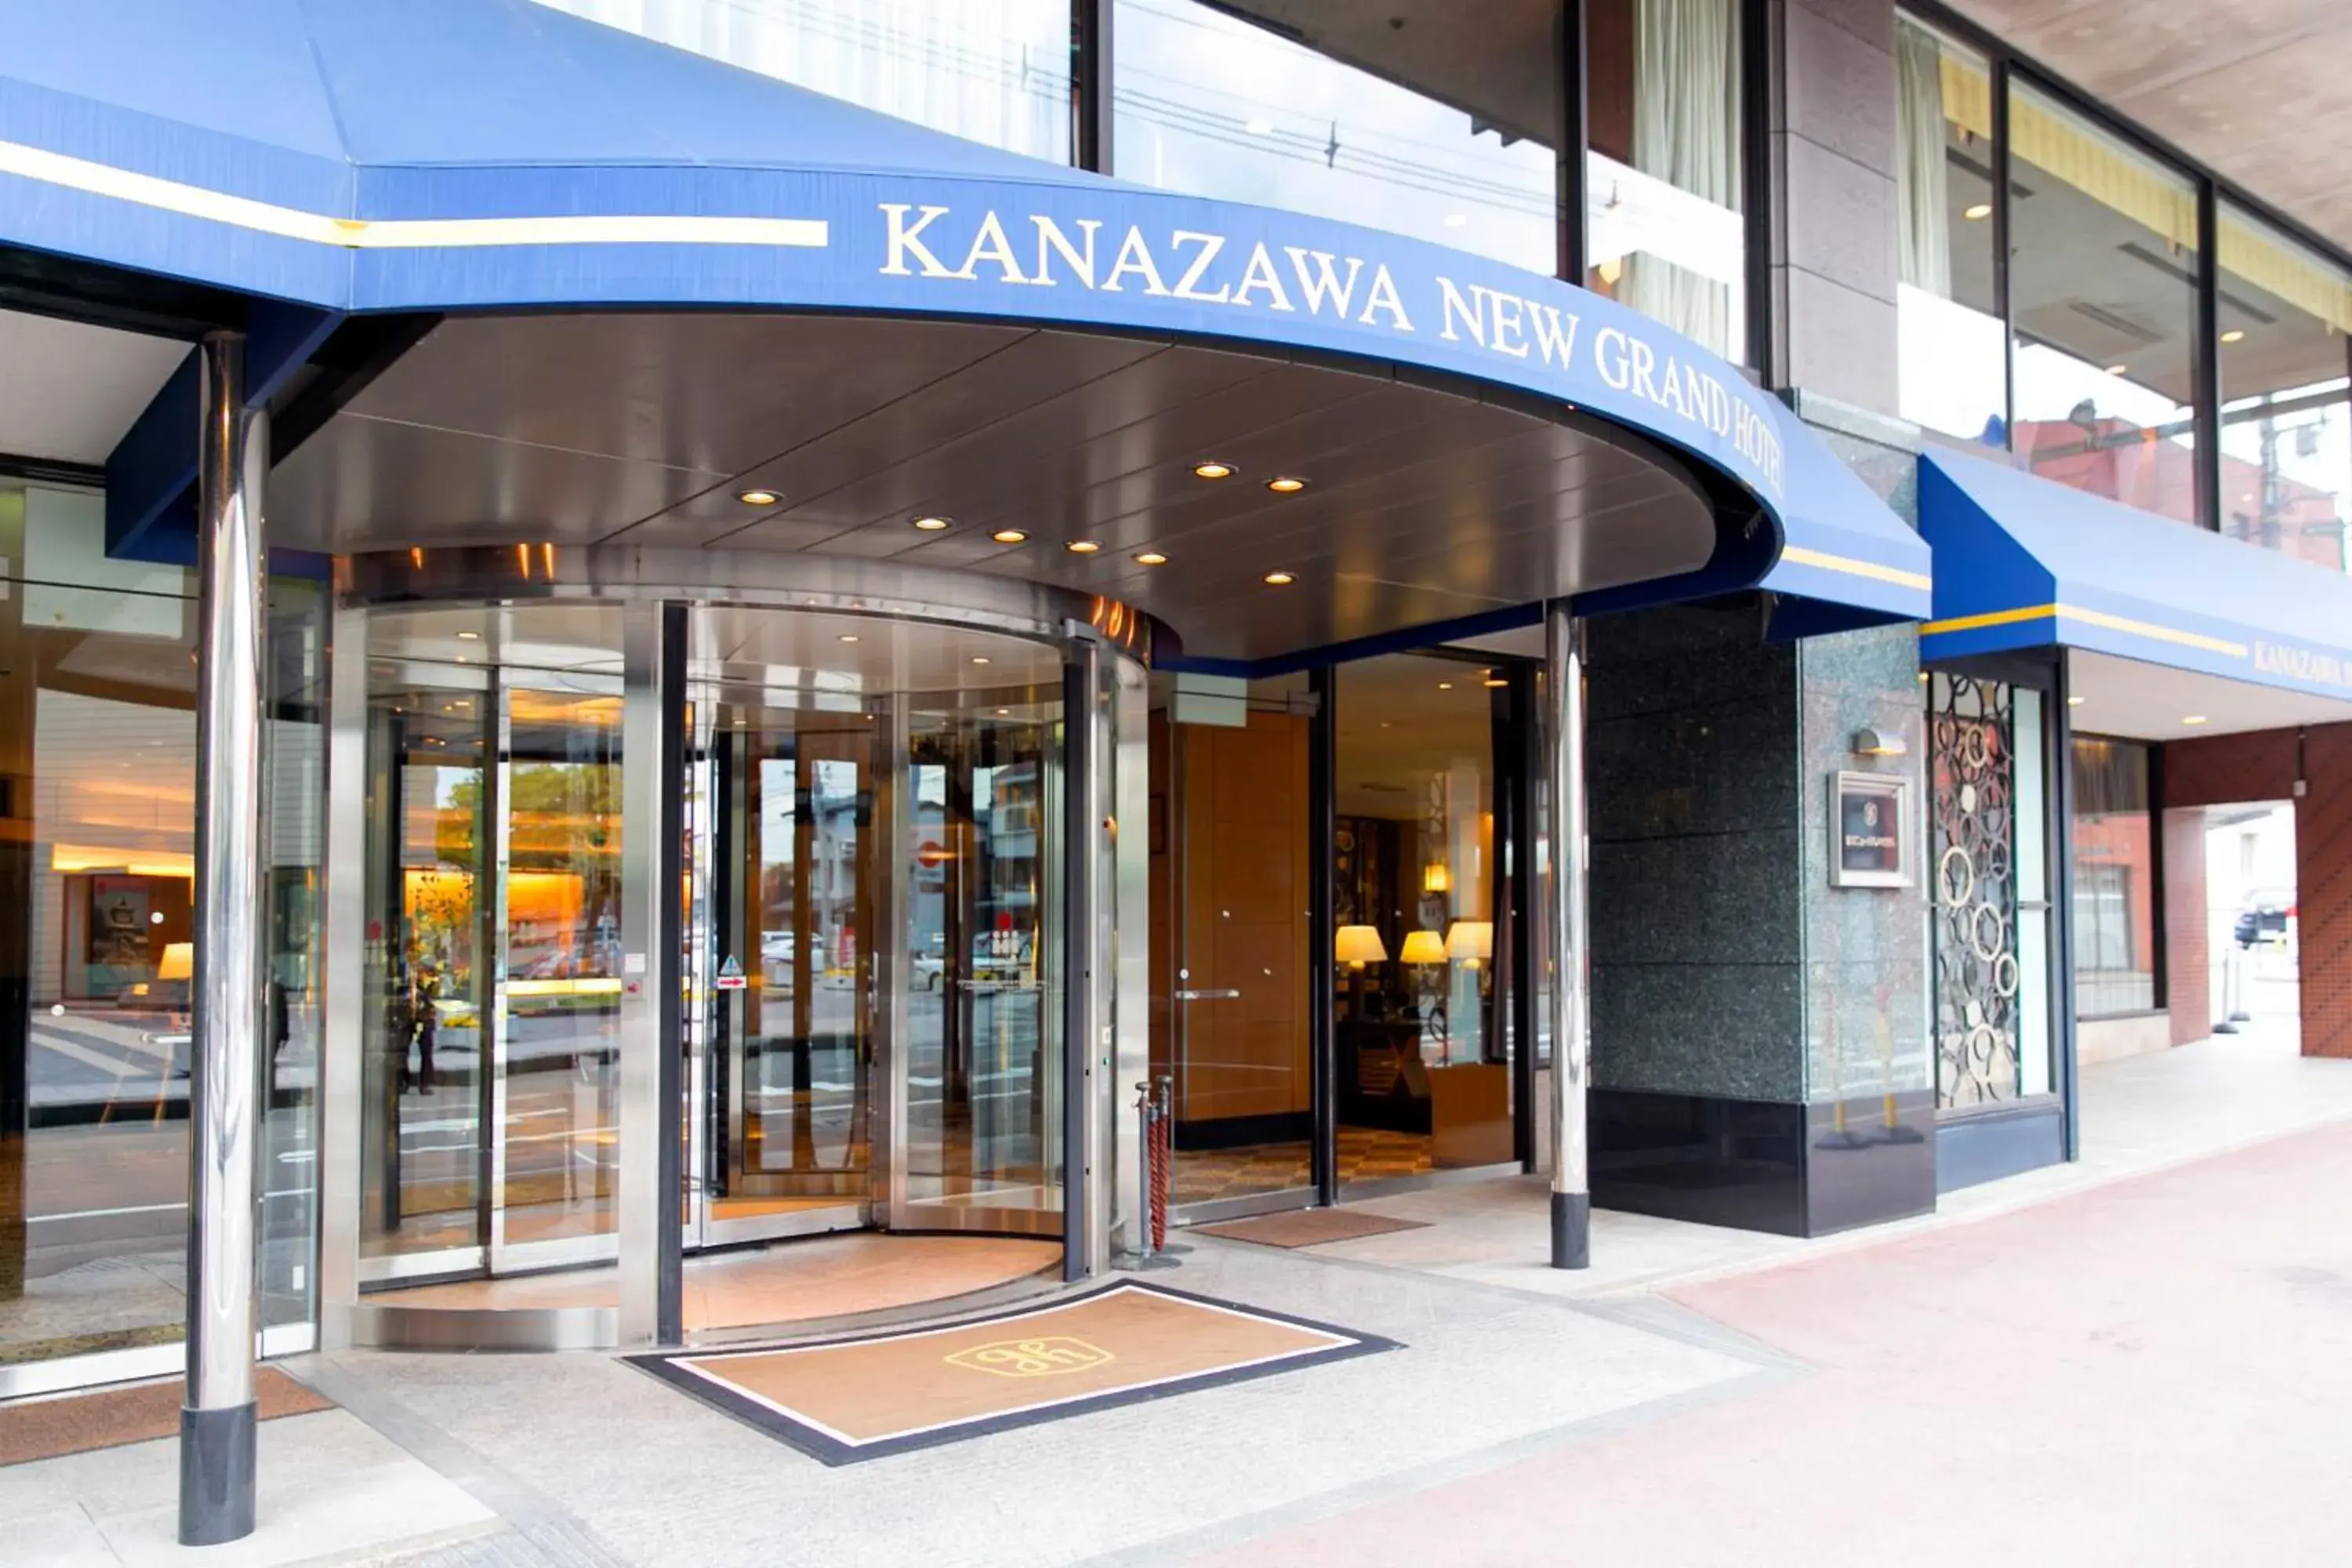 Facade/entrance in Kanazawa New Grand Hotel